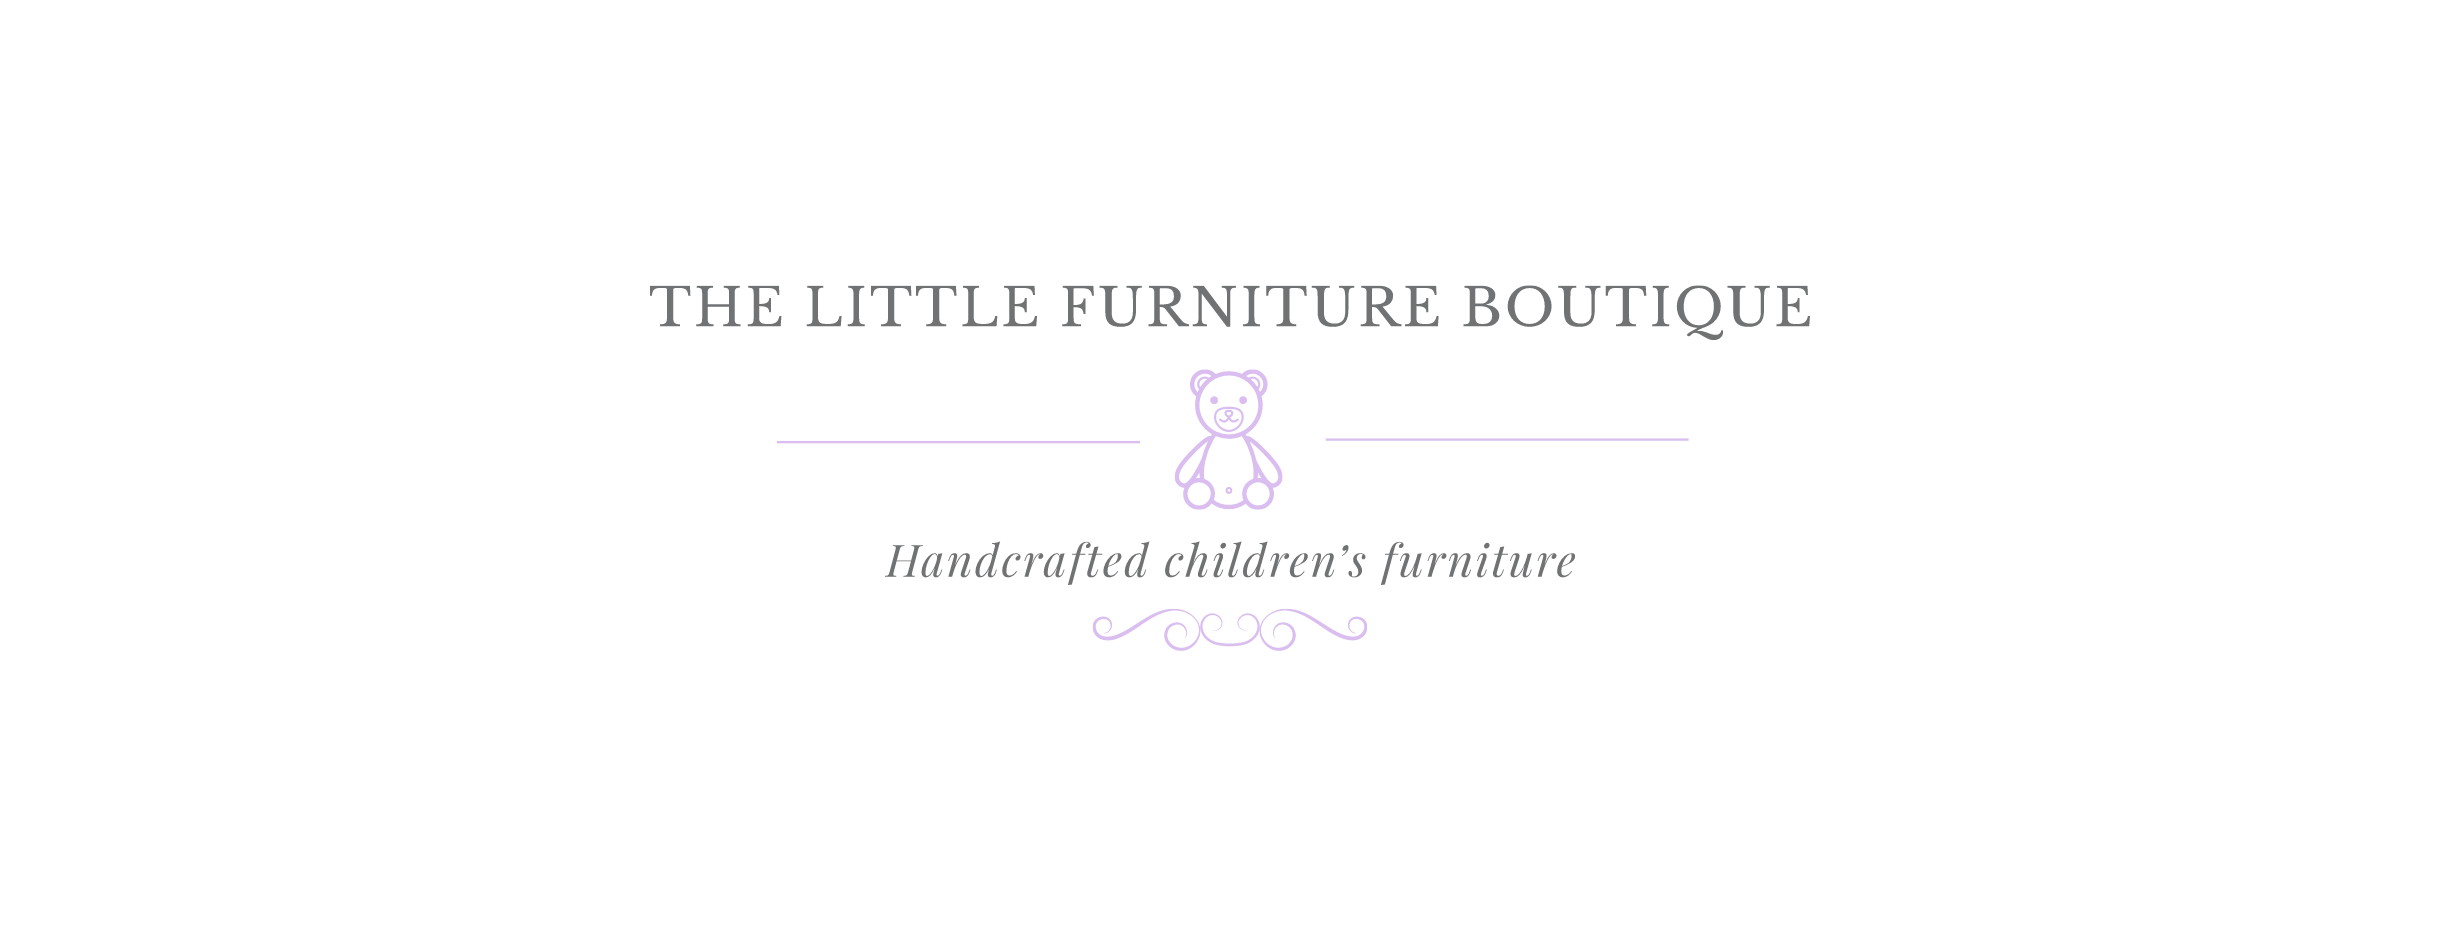 The Little Furniture Boutique 's logo